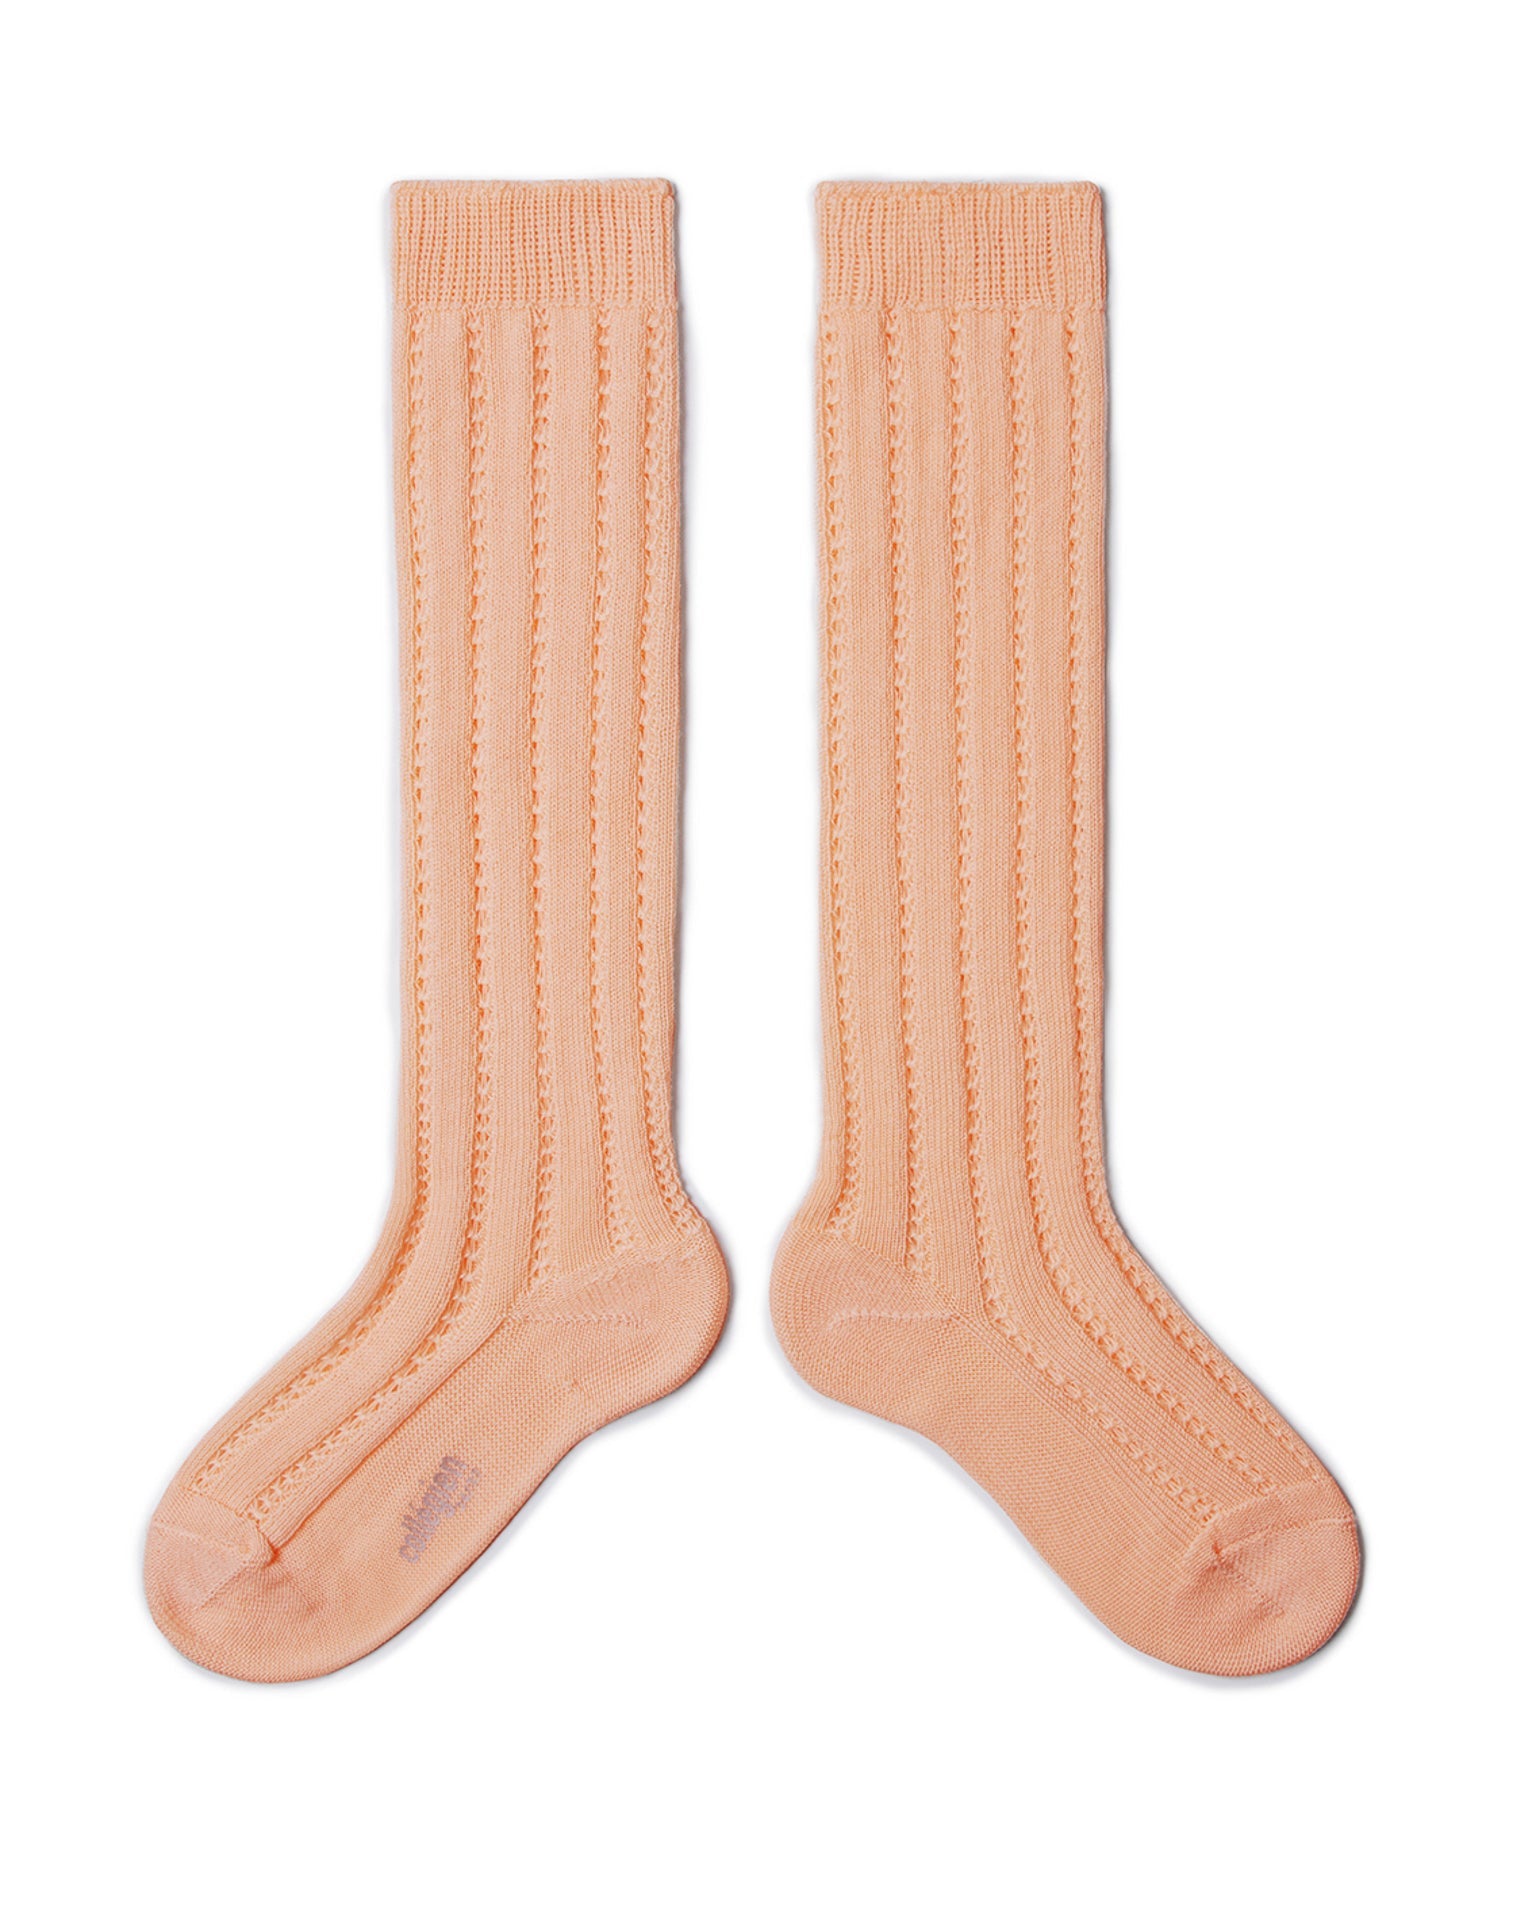 Little collegien accessories léonie knee socks in sorbet